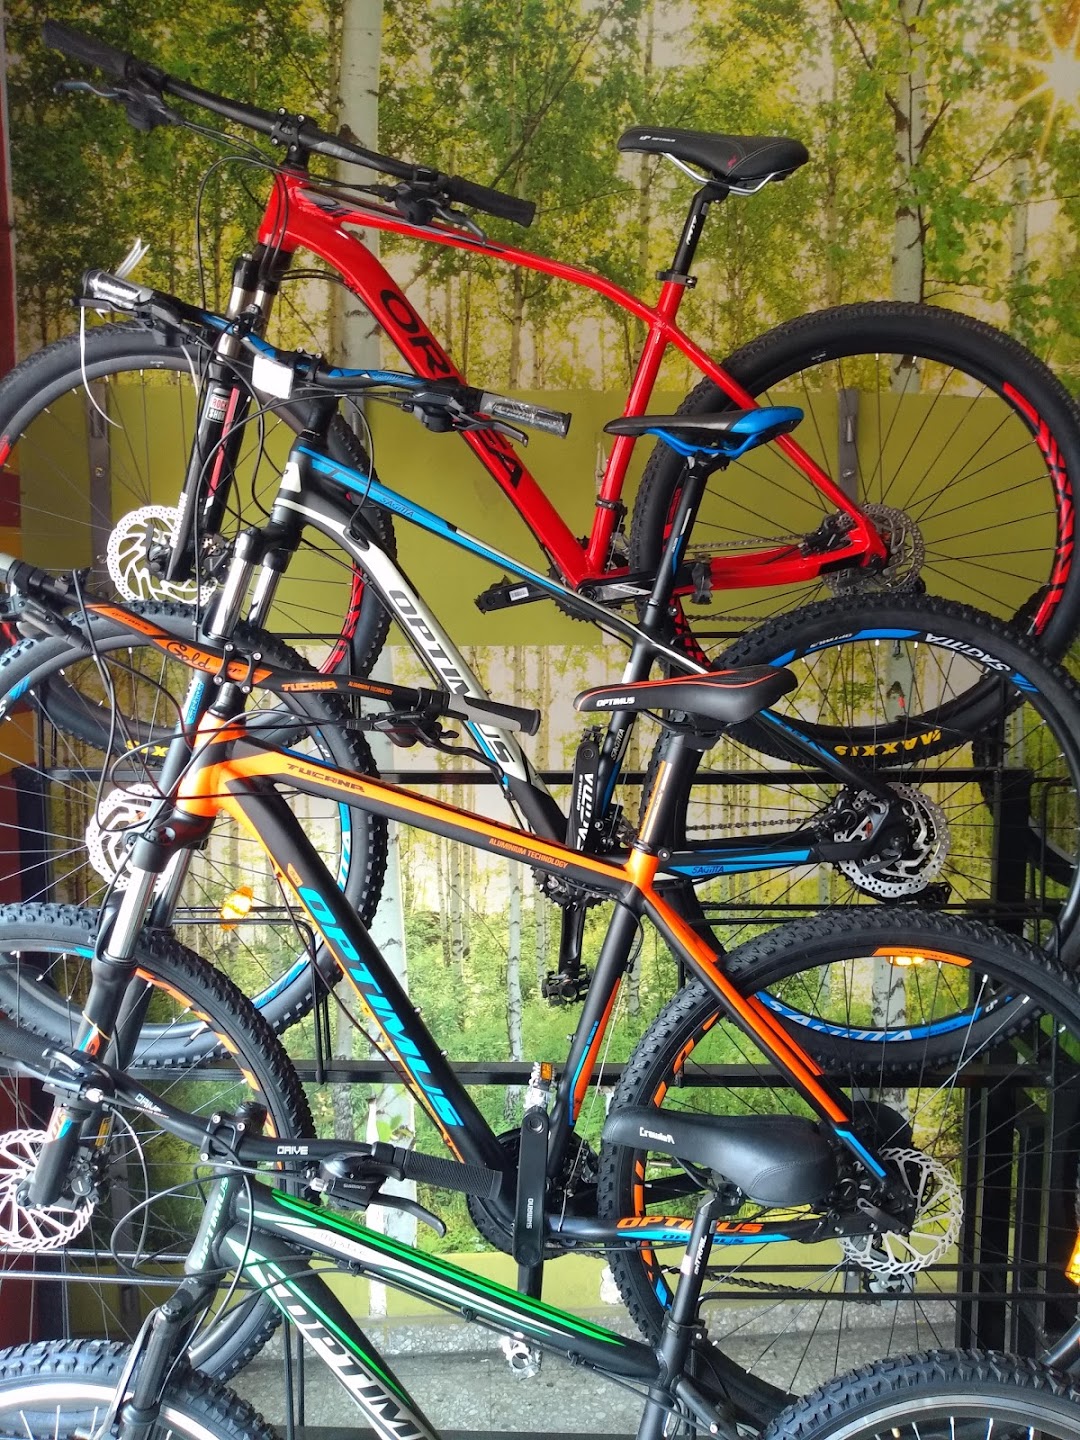 Bicicletería Milán